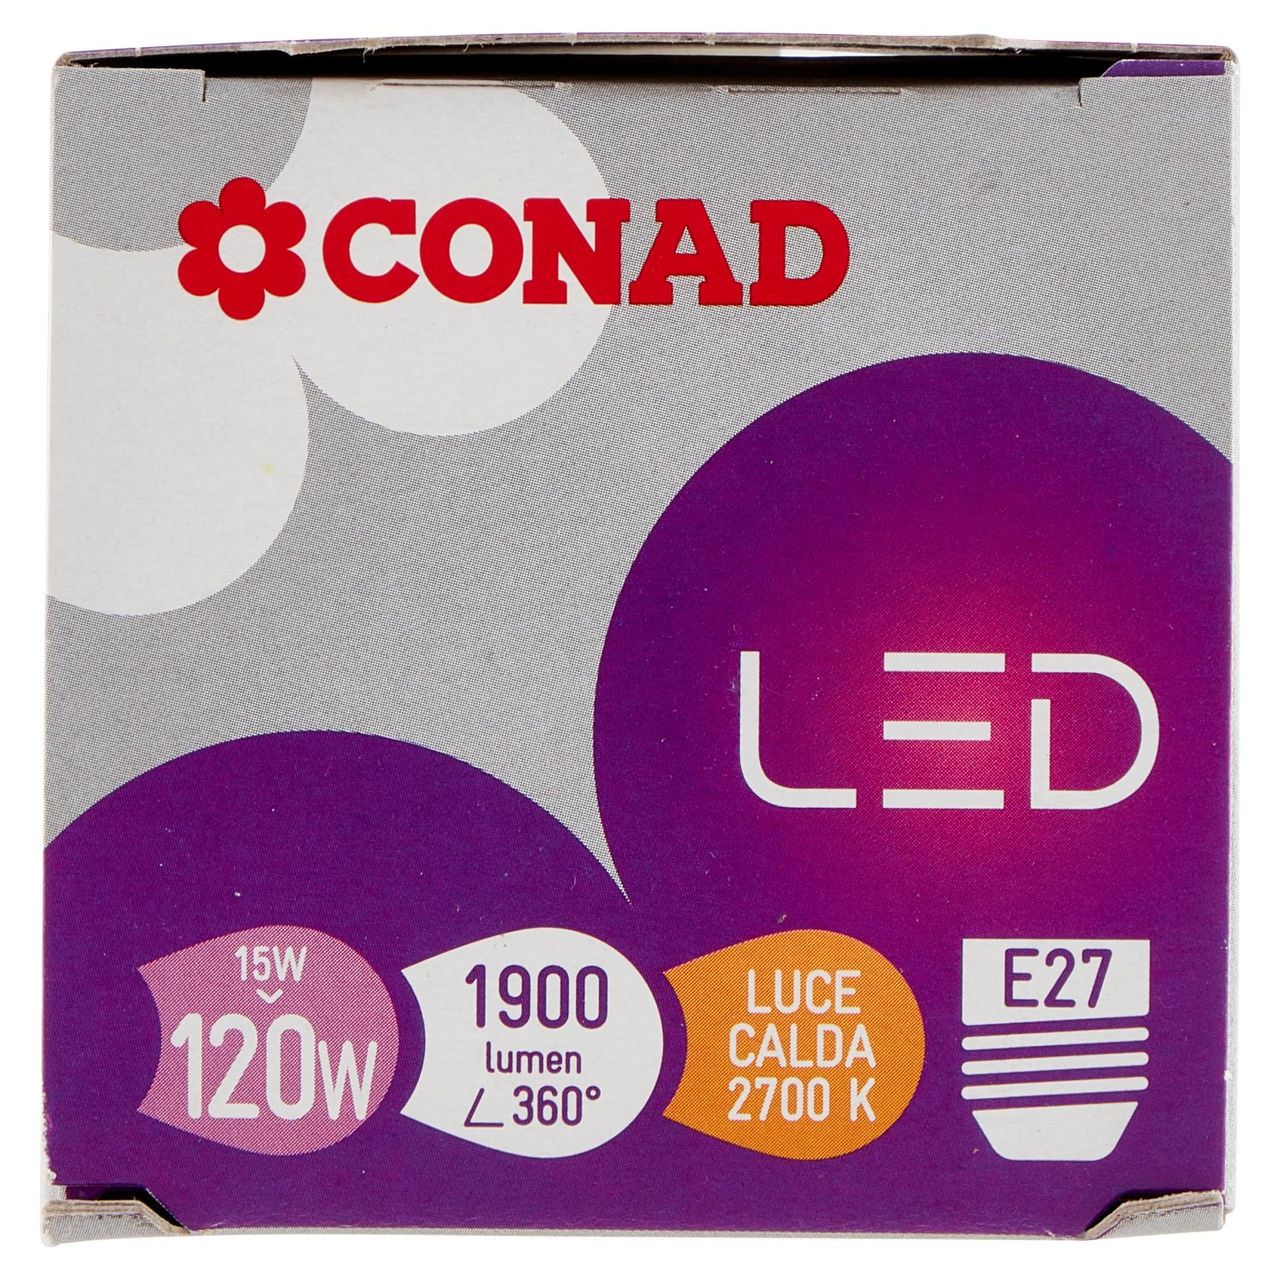 CONAD Led 15W 1900 Lumen E27 Luce Calda